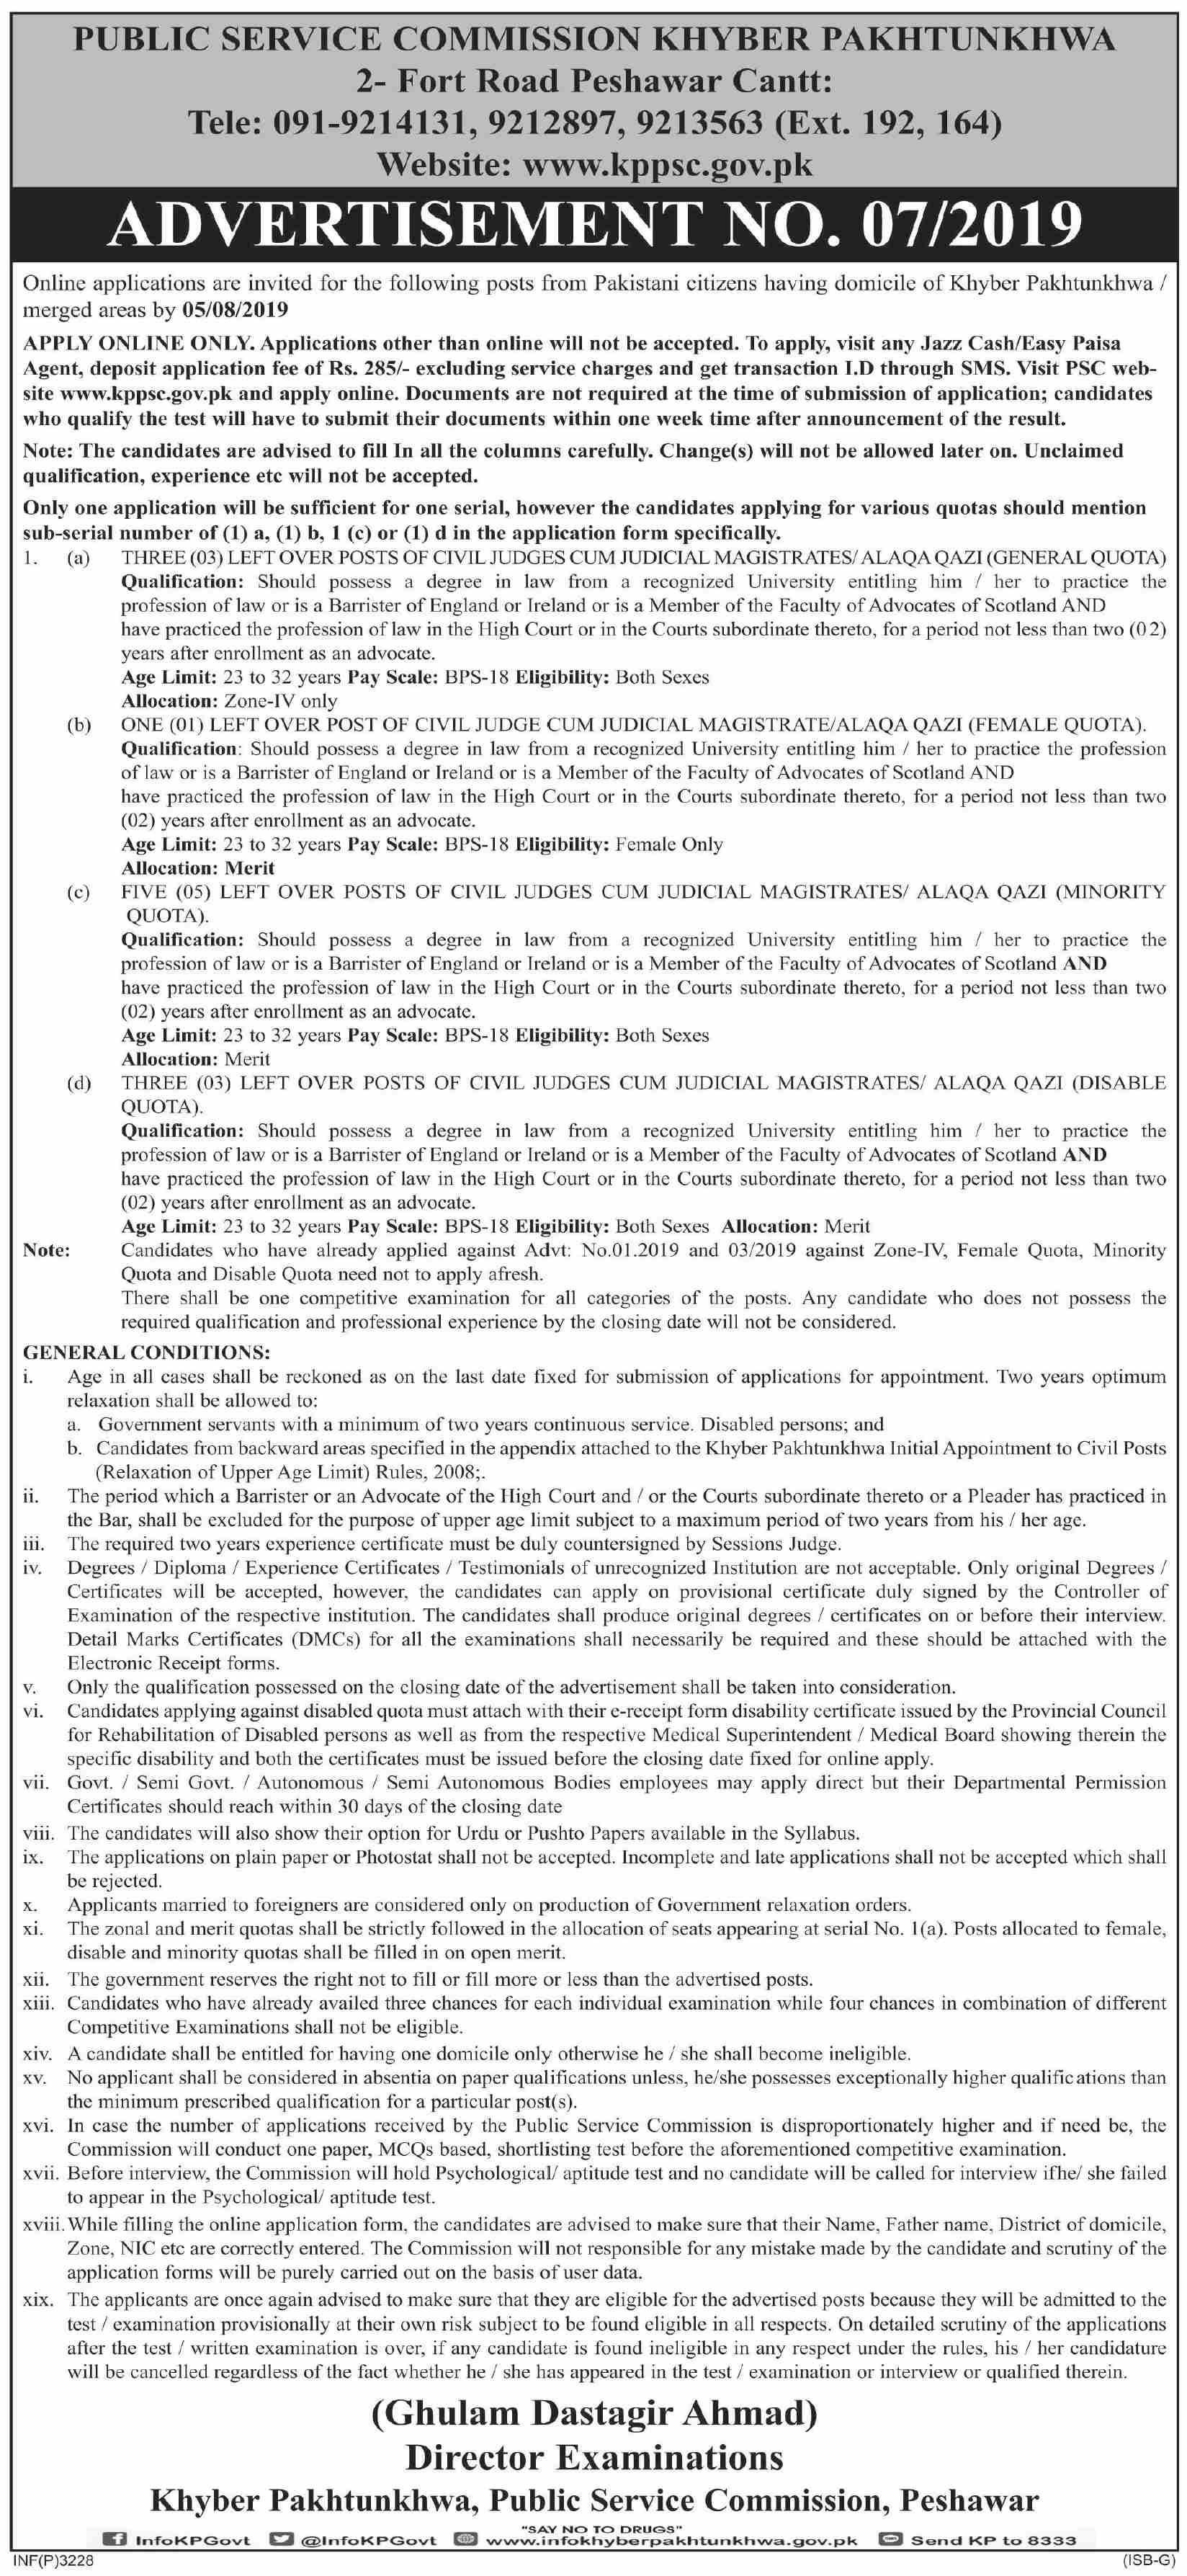 Khyber Pakhtunkhwa Public Service Commission (KPPSC) jobs 2019